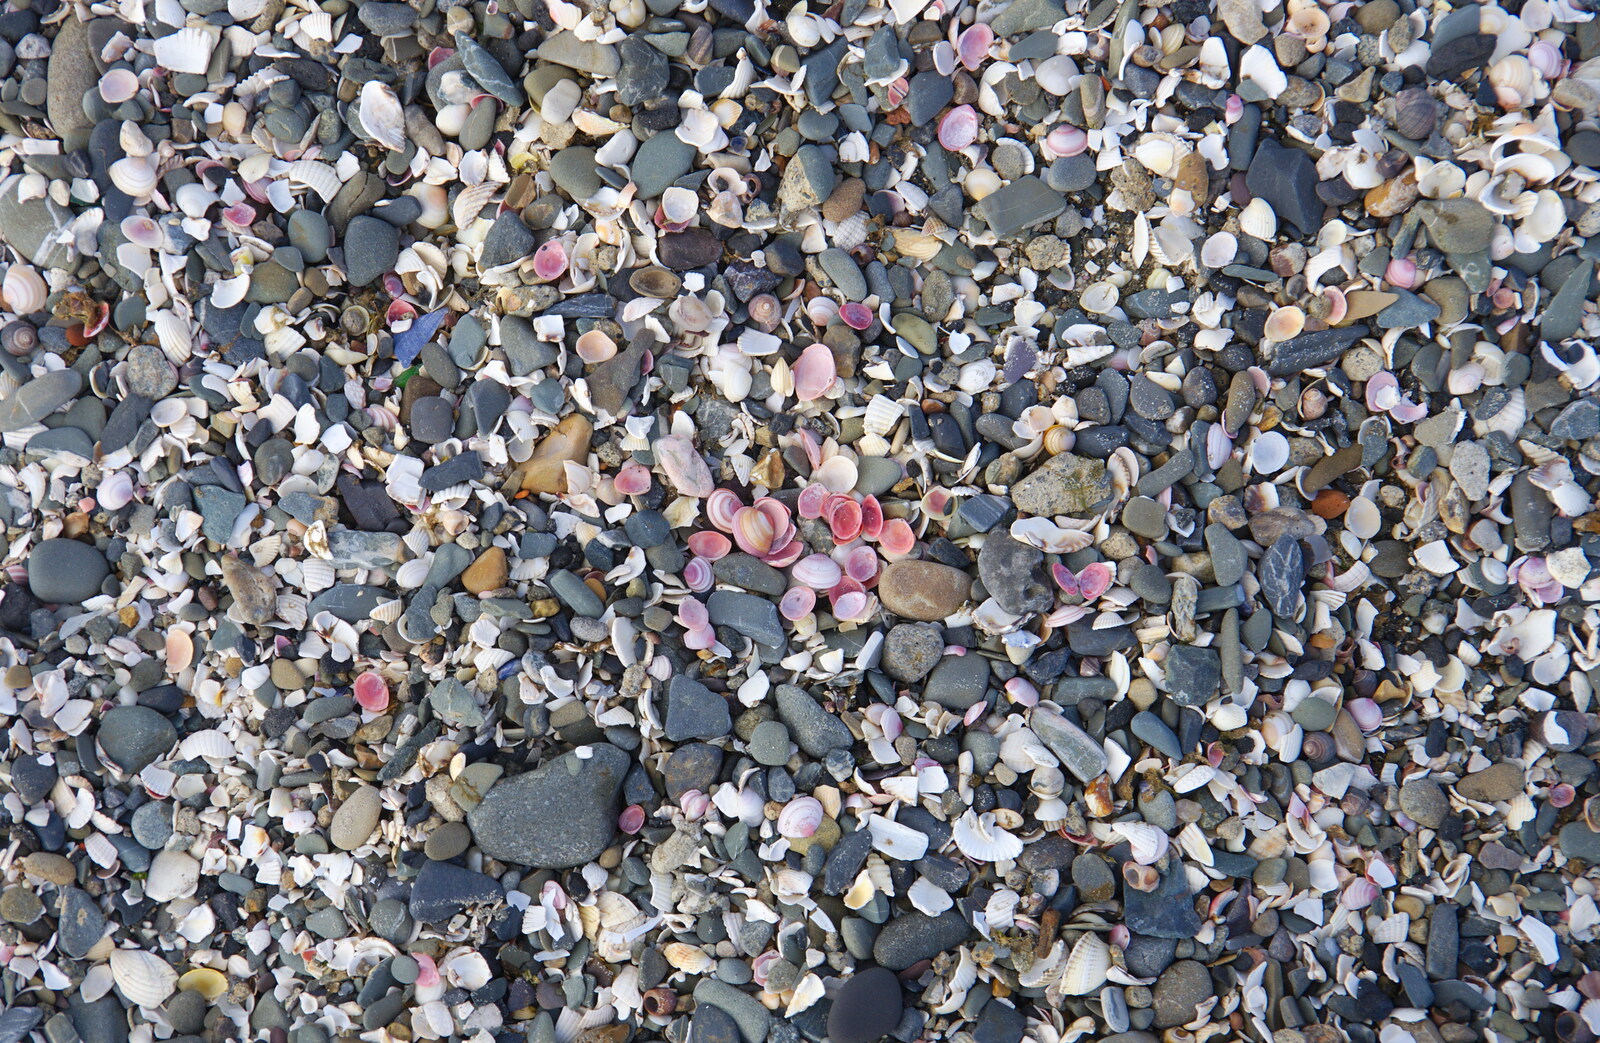 A cluster of pink shells, in a sea of grey pebbles from The Fleadh Cheoil na hÉireann, Droichead Átha, Co. Louth, Ireland - 13th August 2019